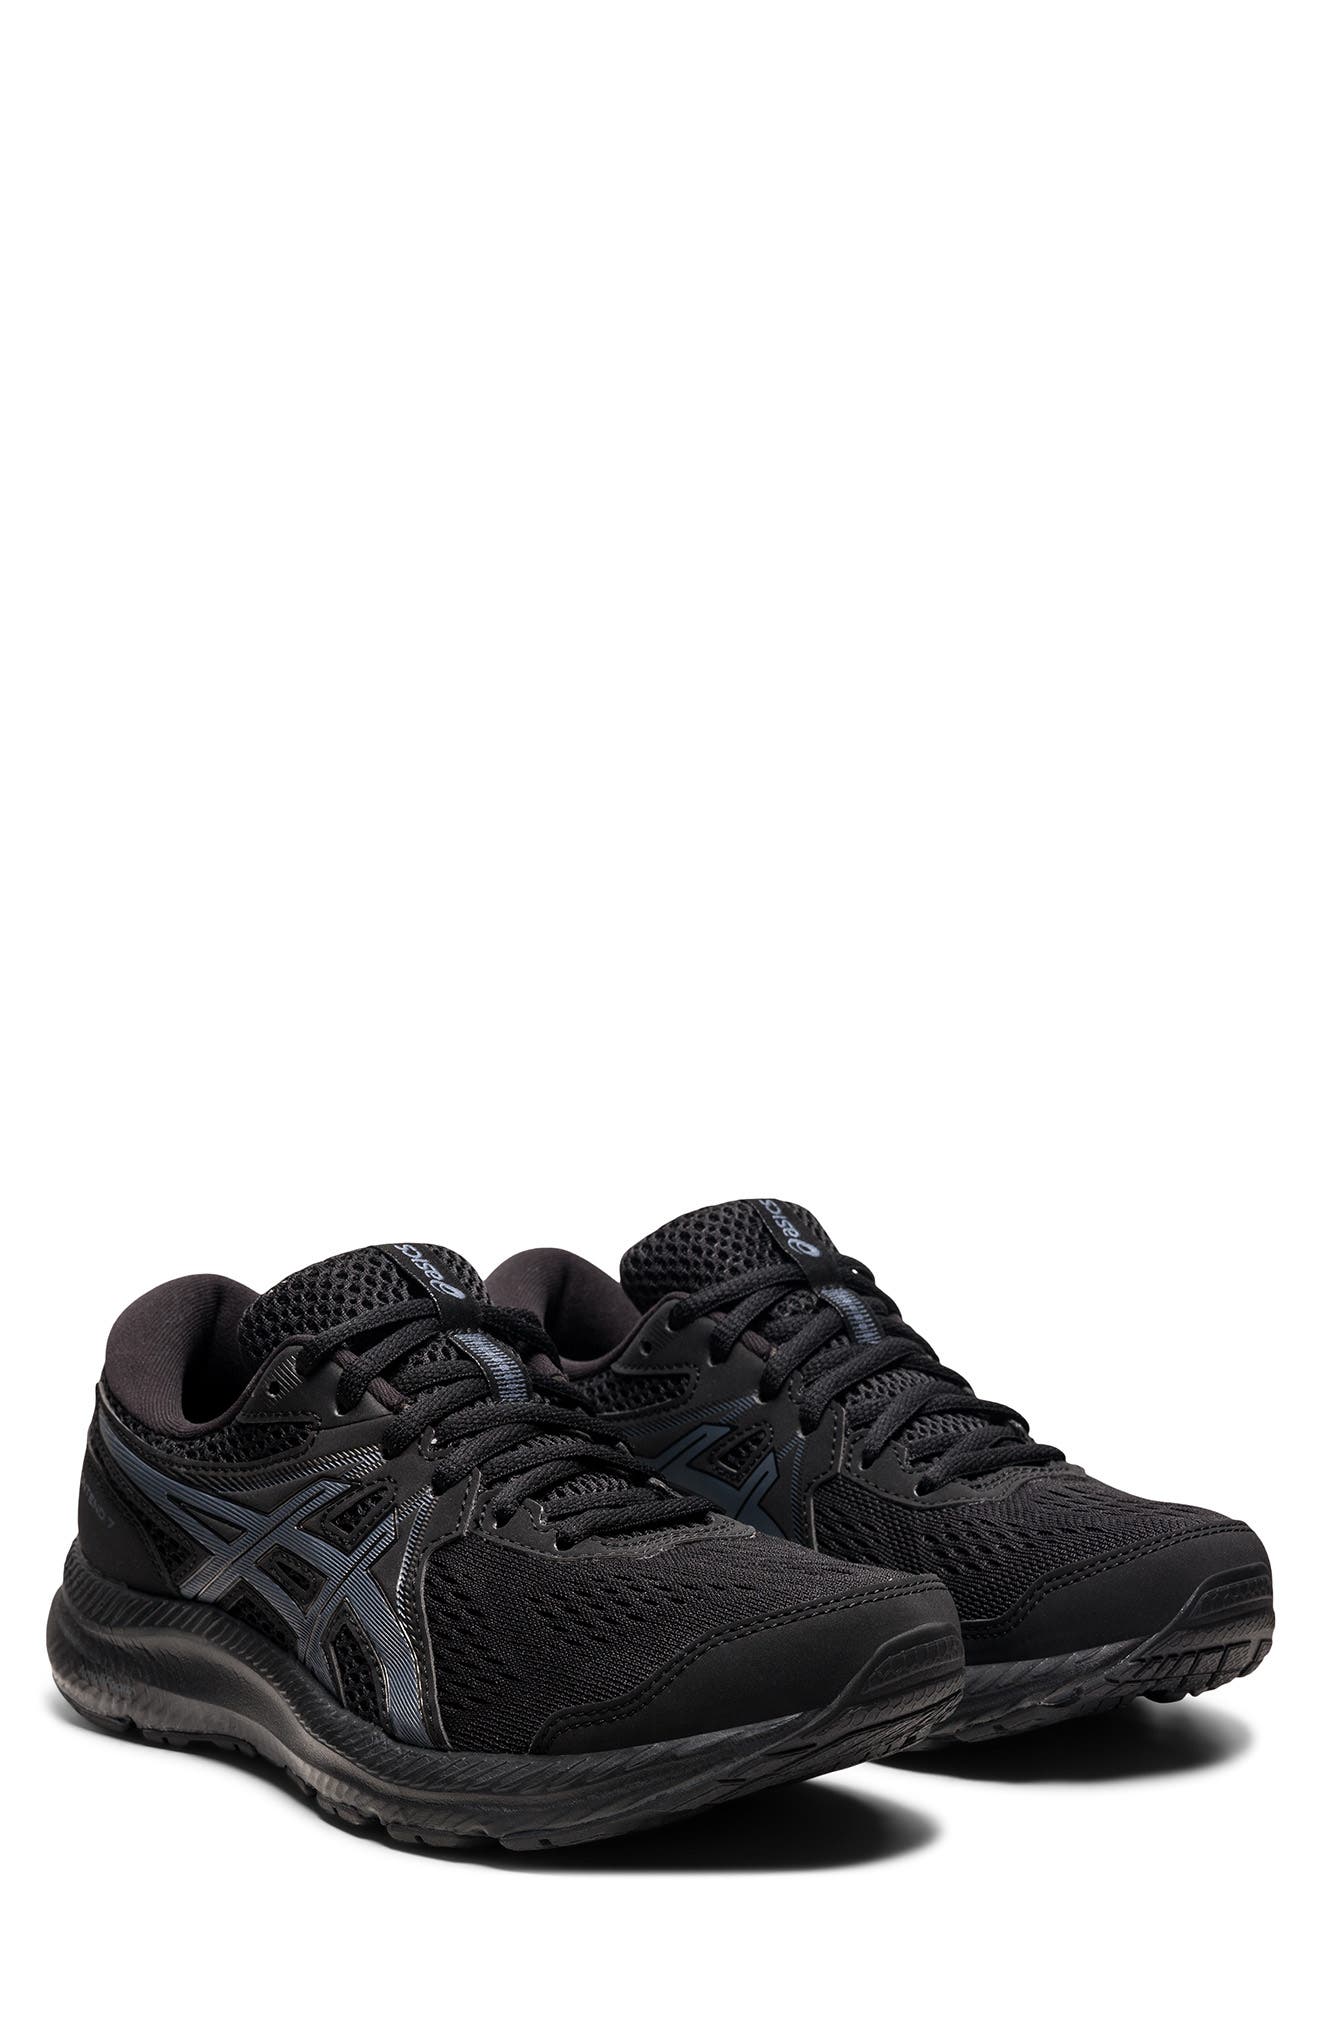 Asics Gel-contend 7 Sneaker In Black/carrier Grey